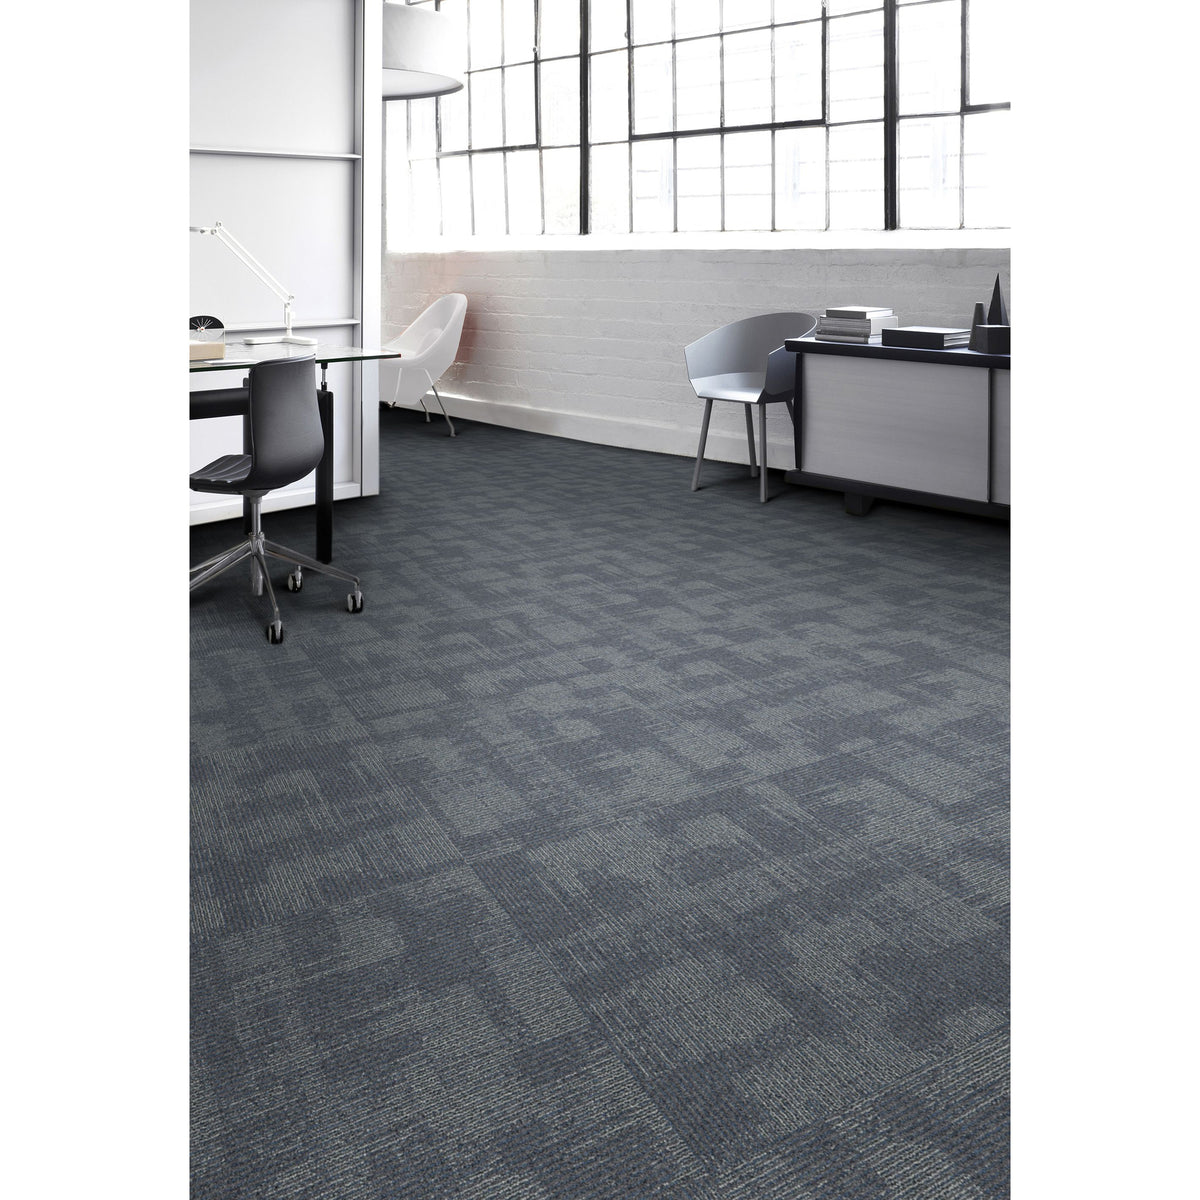 Aladdin Commercial - Primary Effect - Pattern Perspective - Carpet Tile - Shape - Room scene